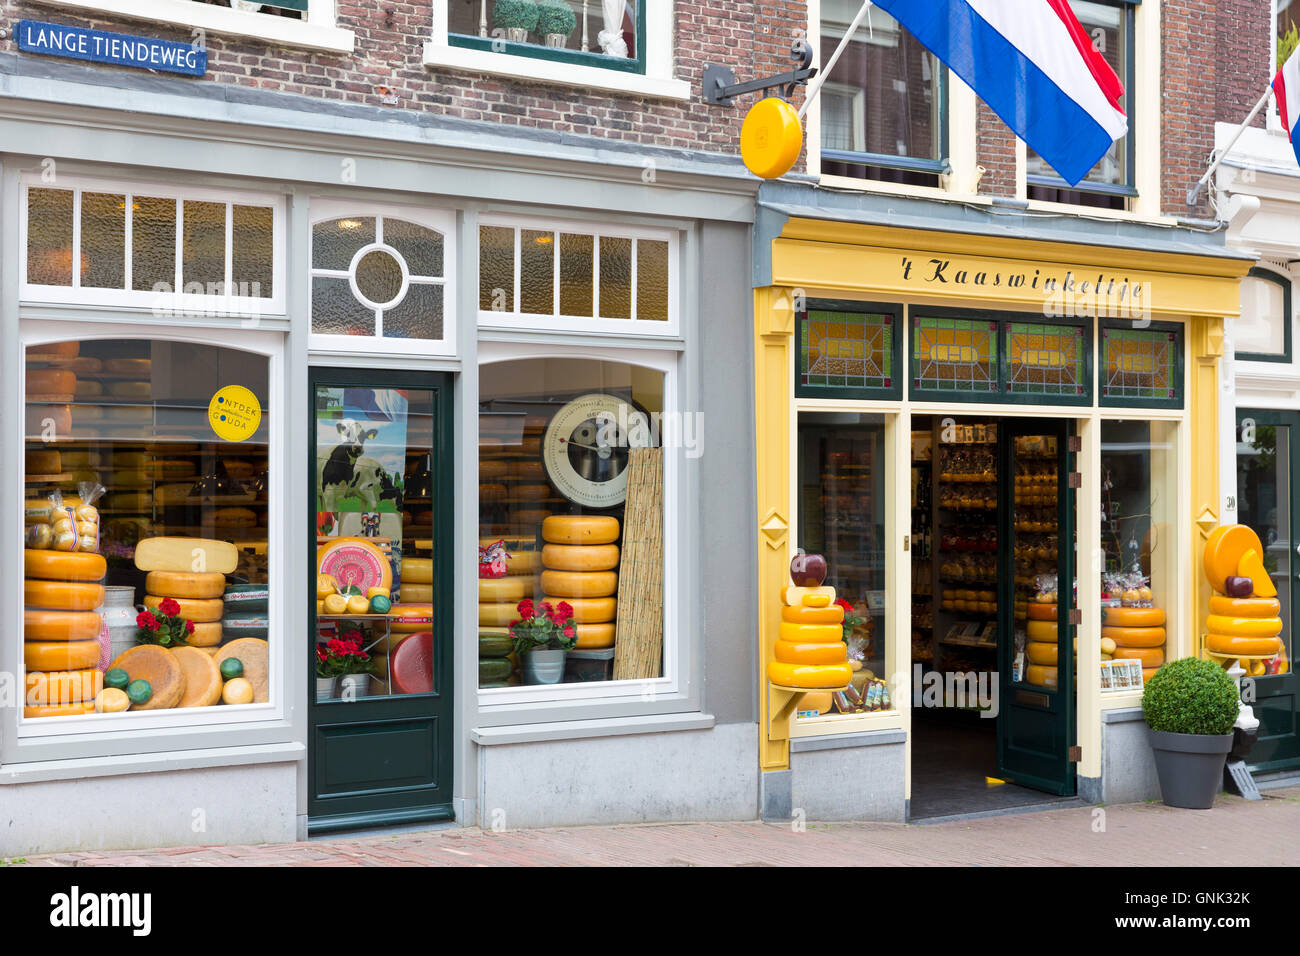 Shop front frontage cheese shop 't Kaaswinkeltje in Lange Tiendeweg Gouda, The Netherlands Stock Photo - Alamy